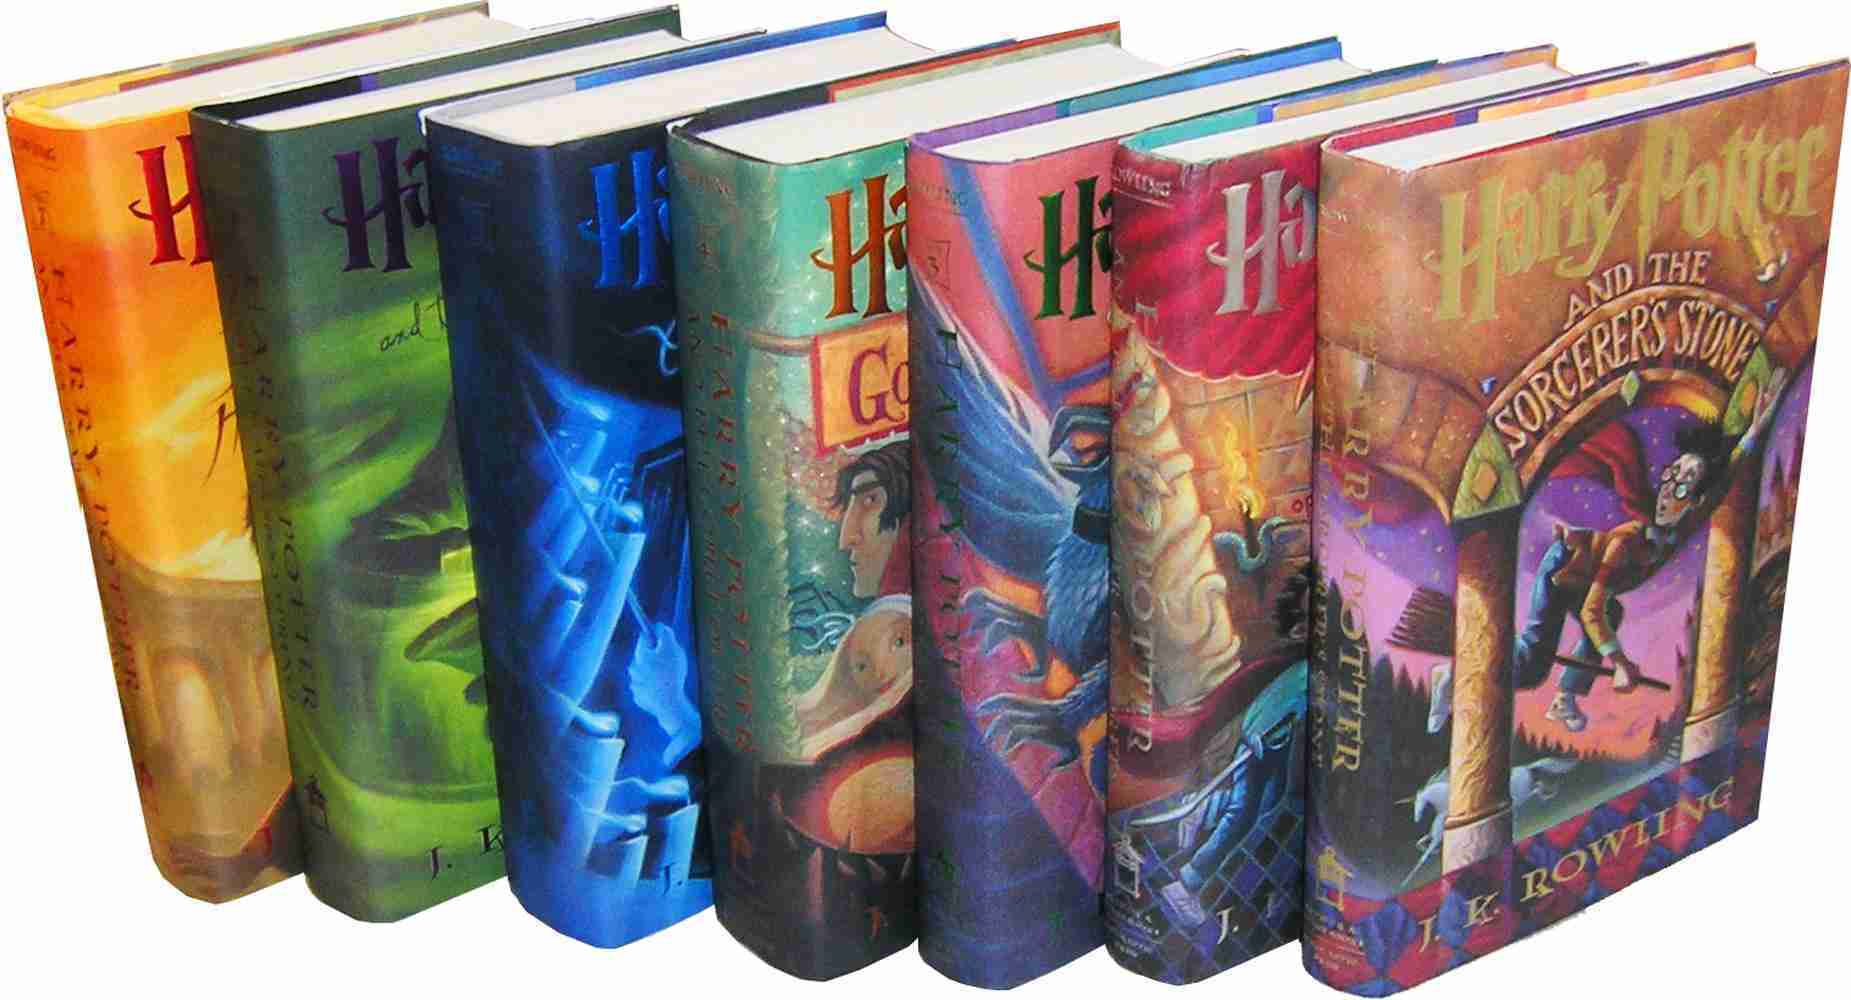 Harry Potter Books in Order